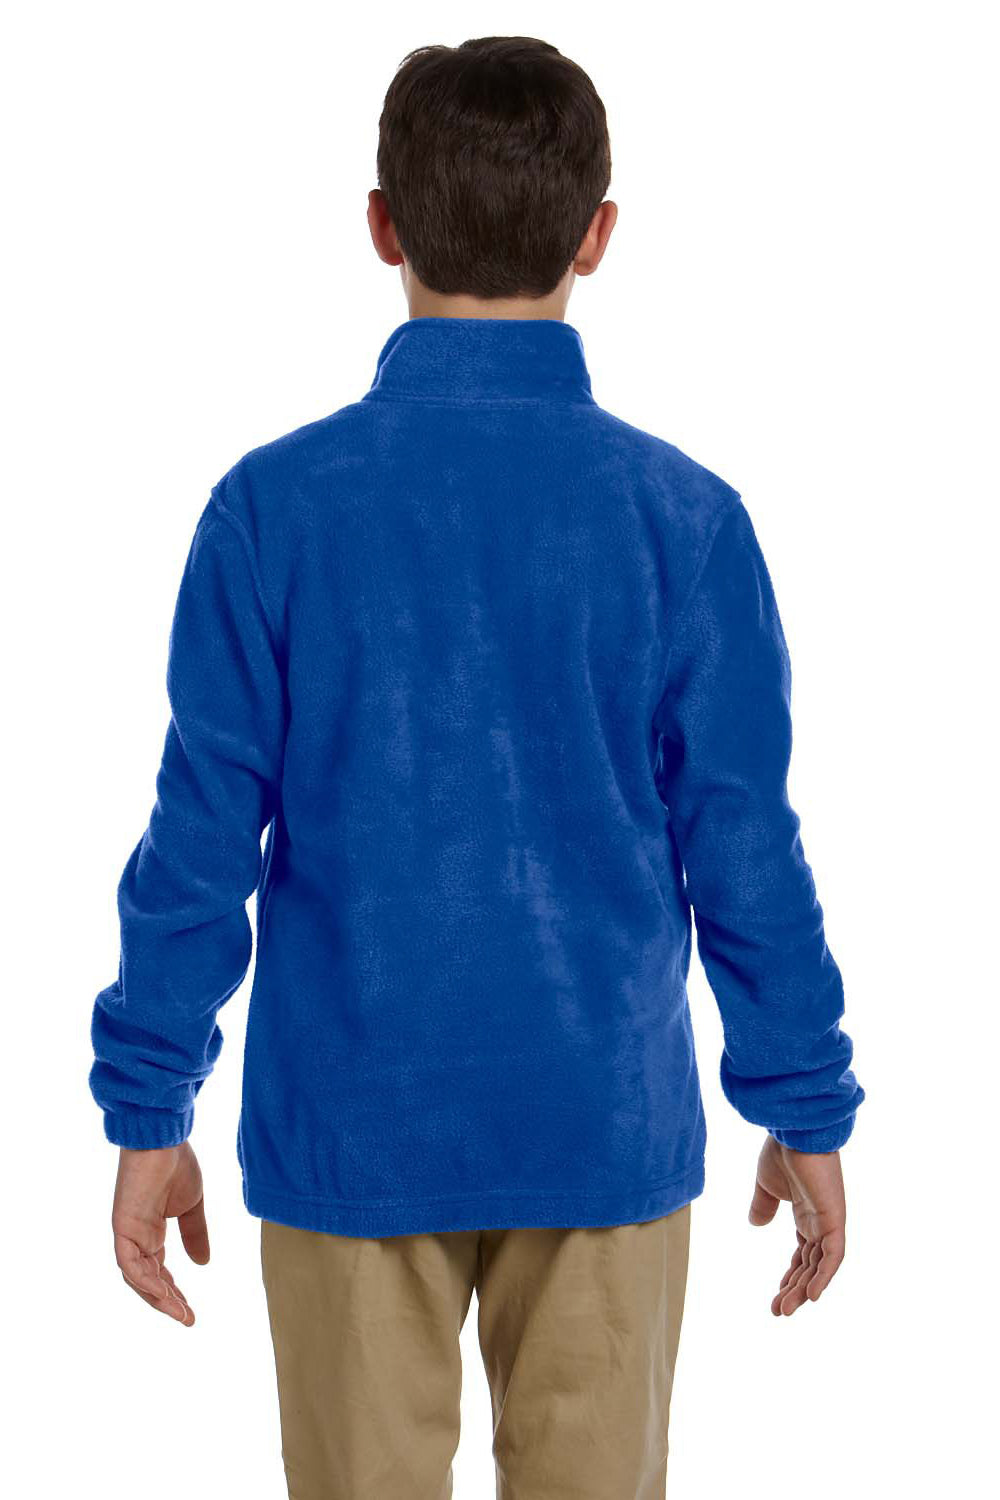 Harriton M990Y Youth Full Zip Fleece Jacket Royal Blue Back